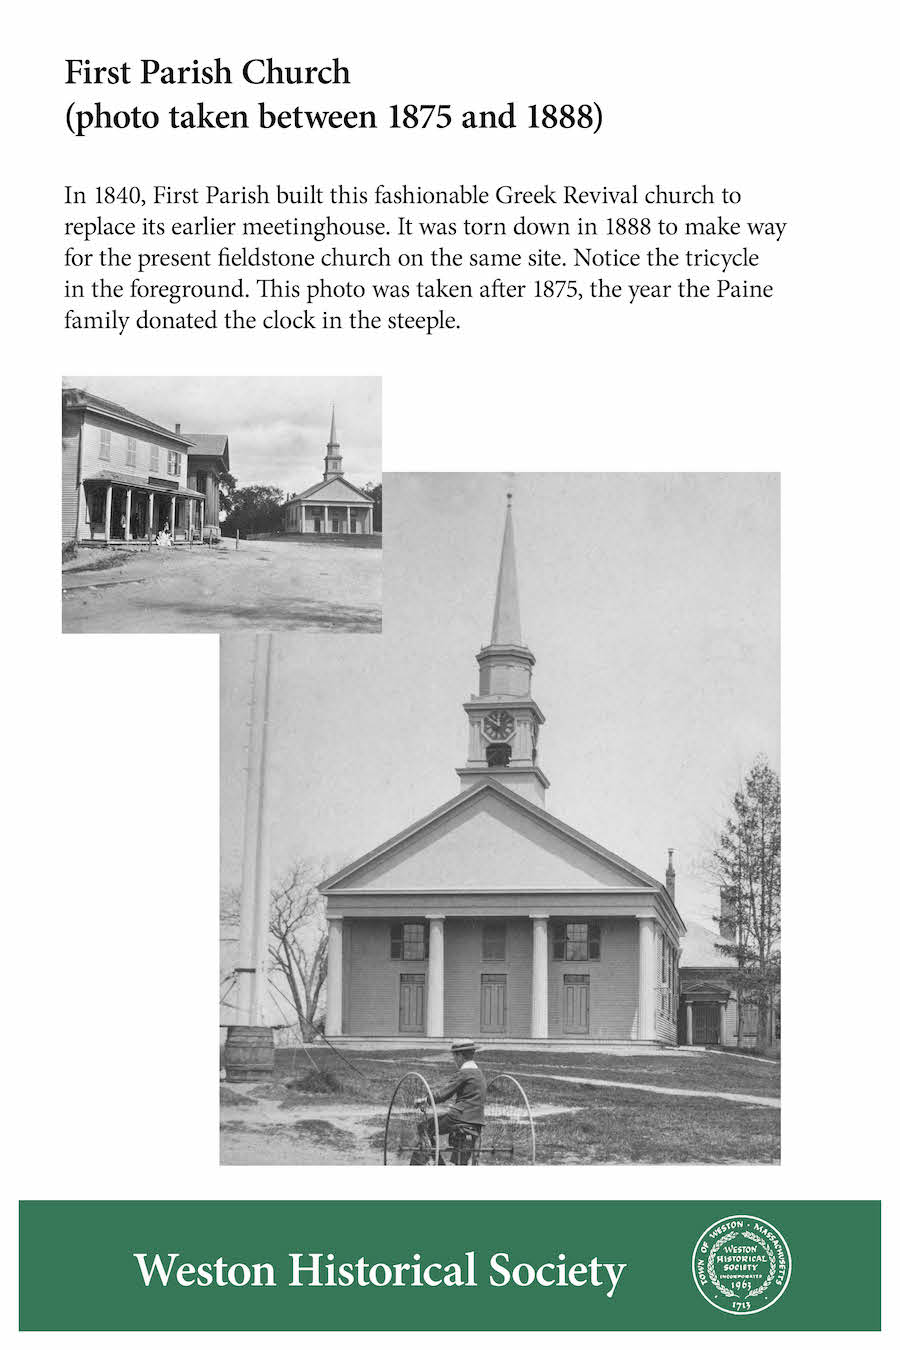 First Parish Church, photo taken between 1875 and 1888.